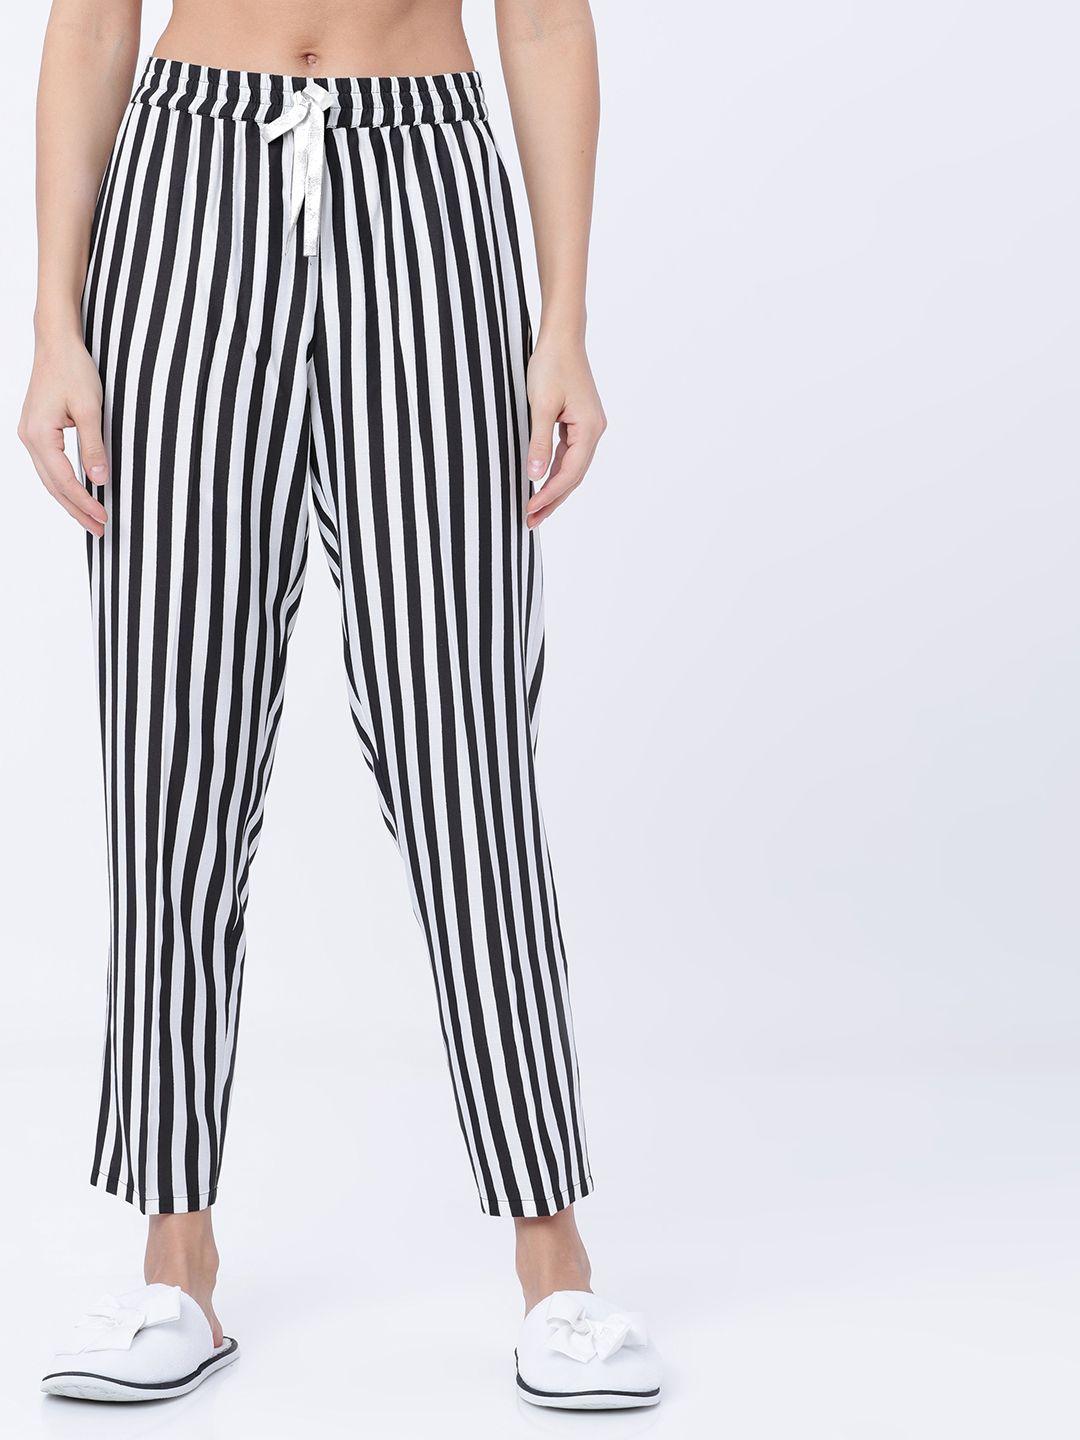 tokyo talkies women black & white striped sustainable lounge pants